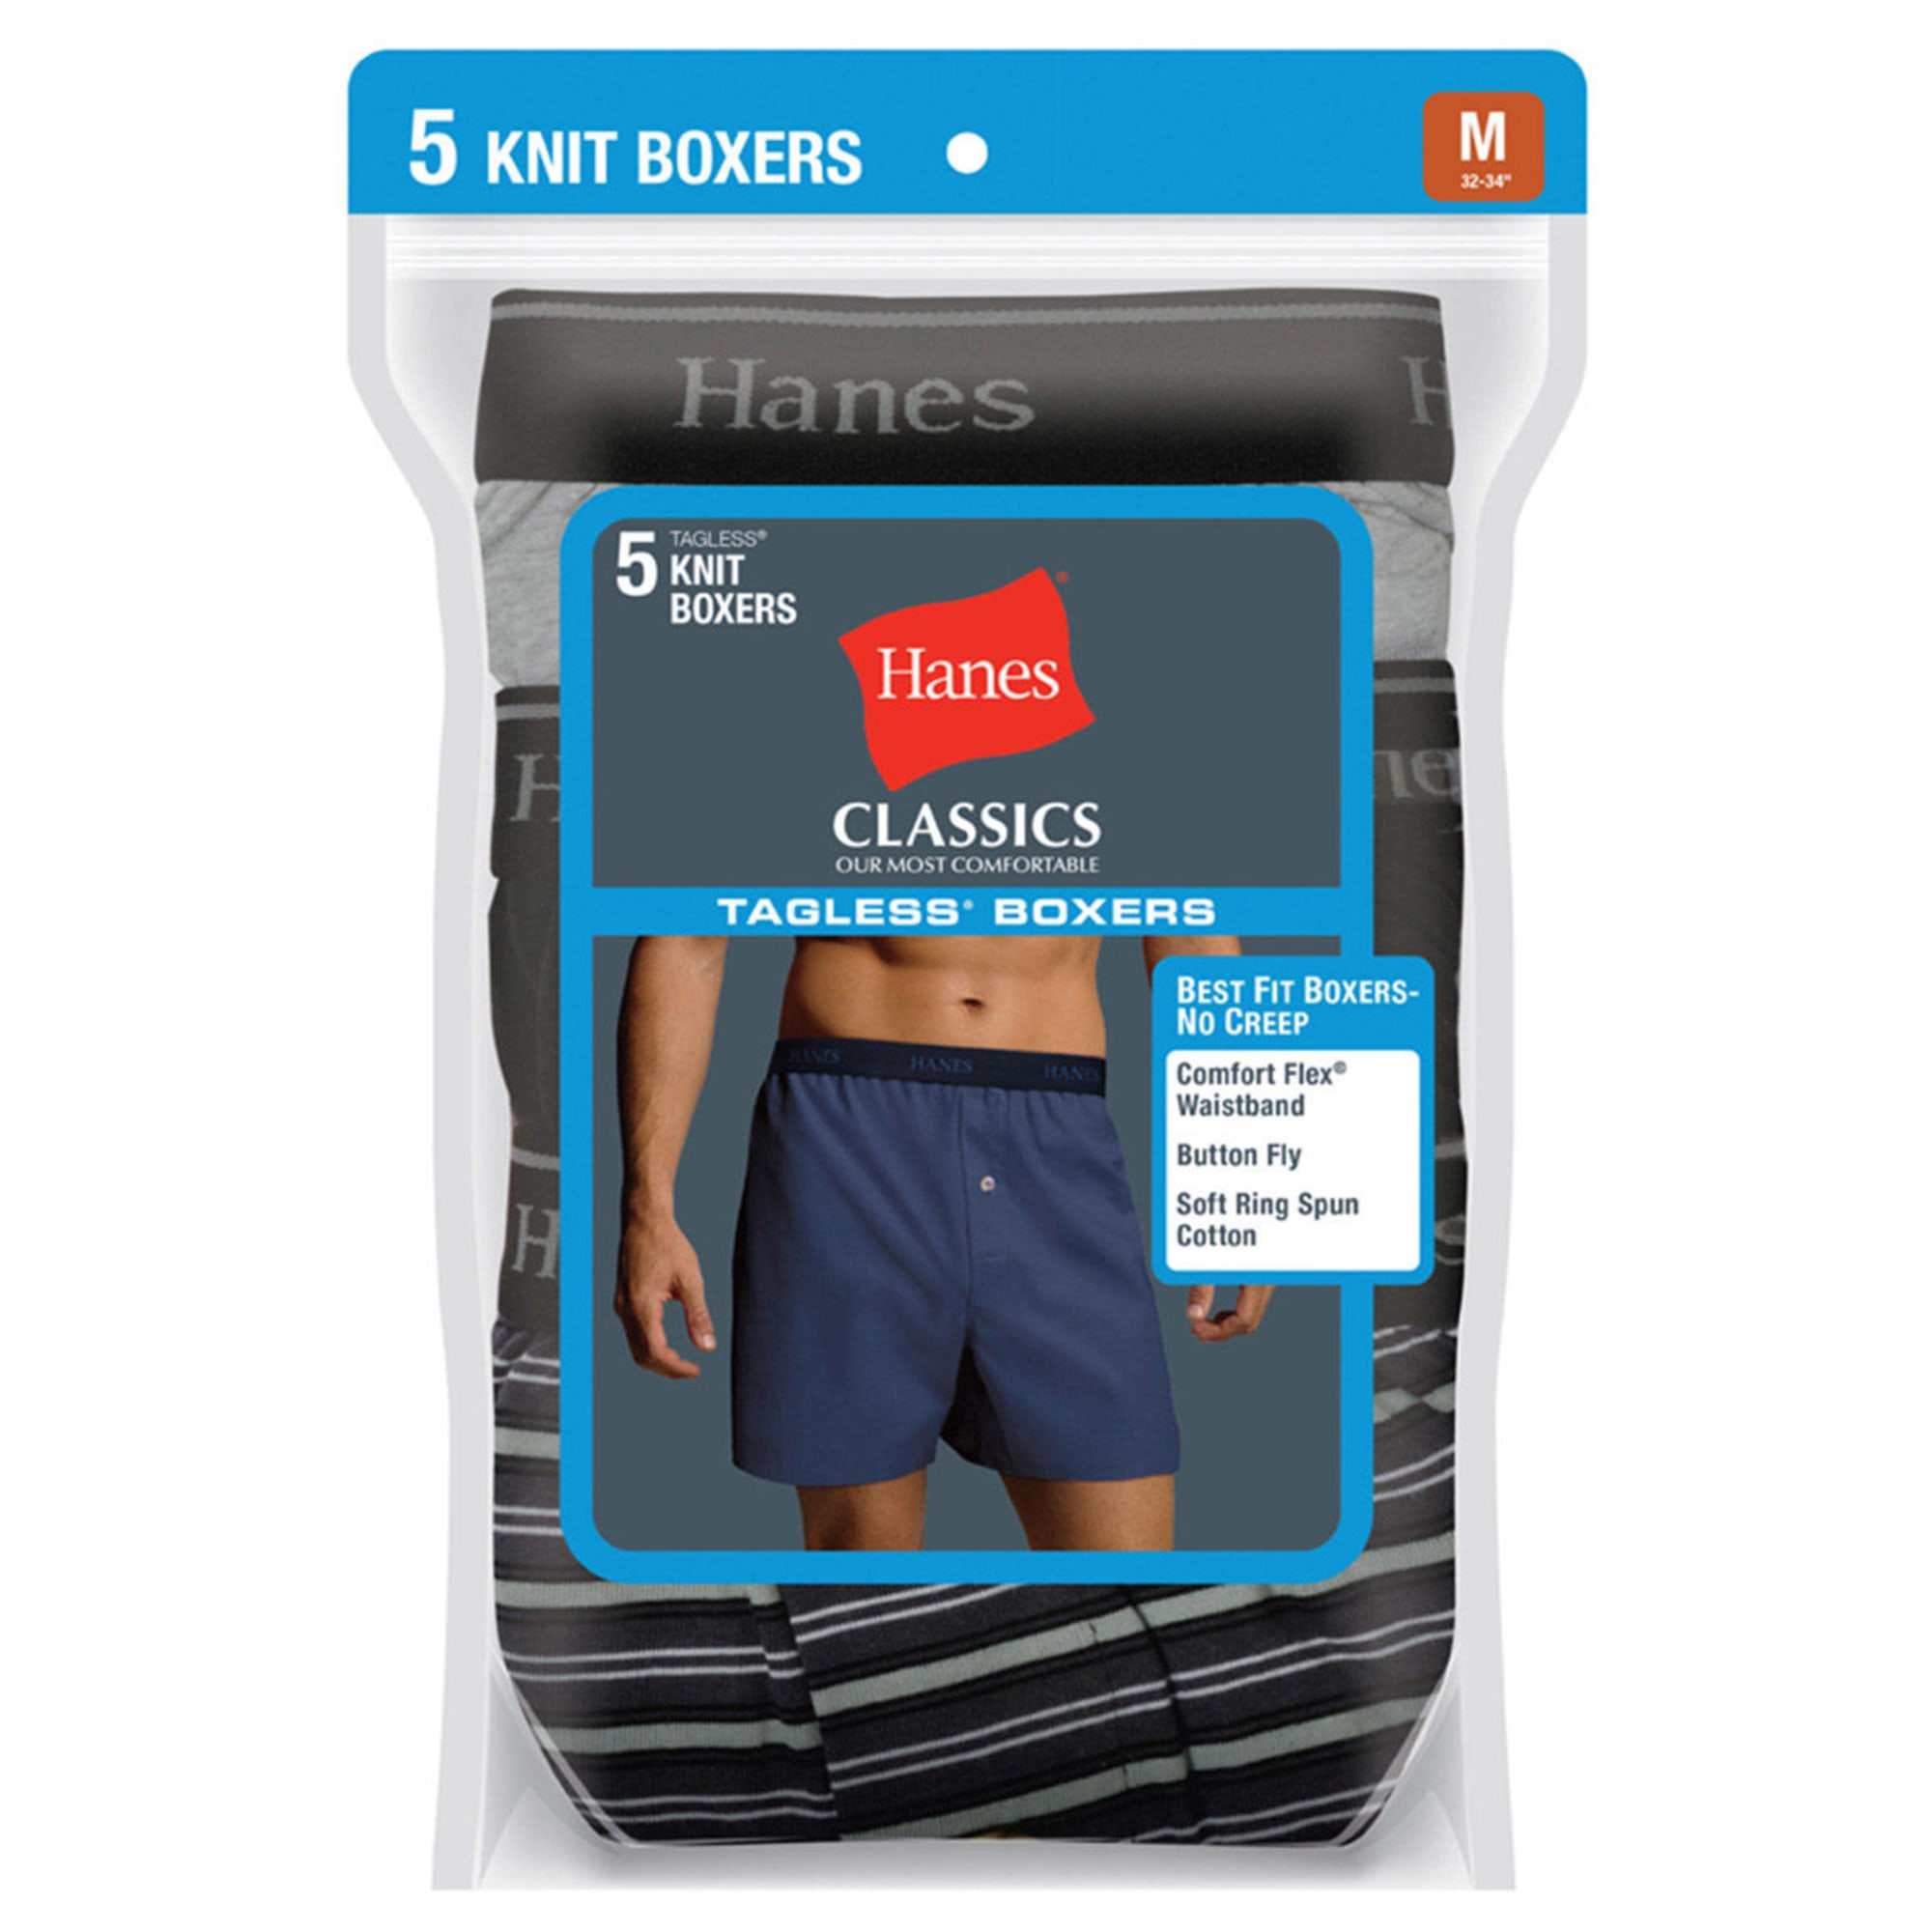 Hanes Classics Men's Briefs with Comfort Flex Waistband 3-Pack